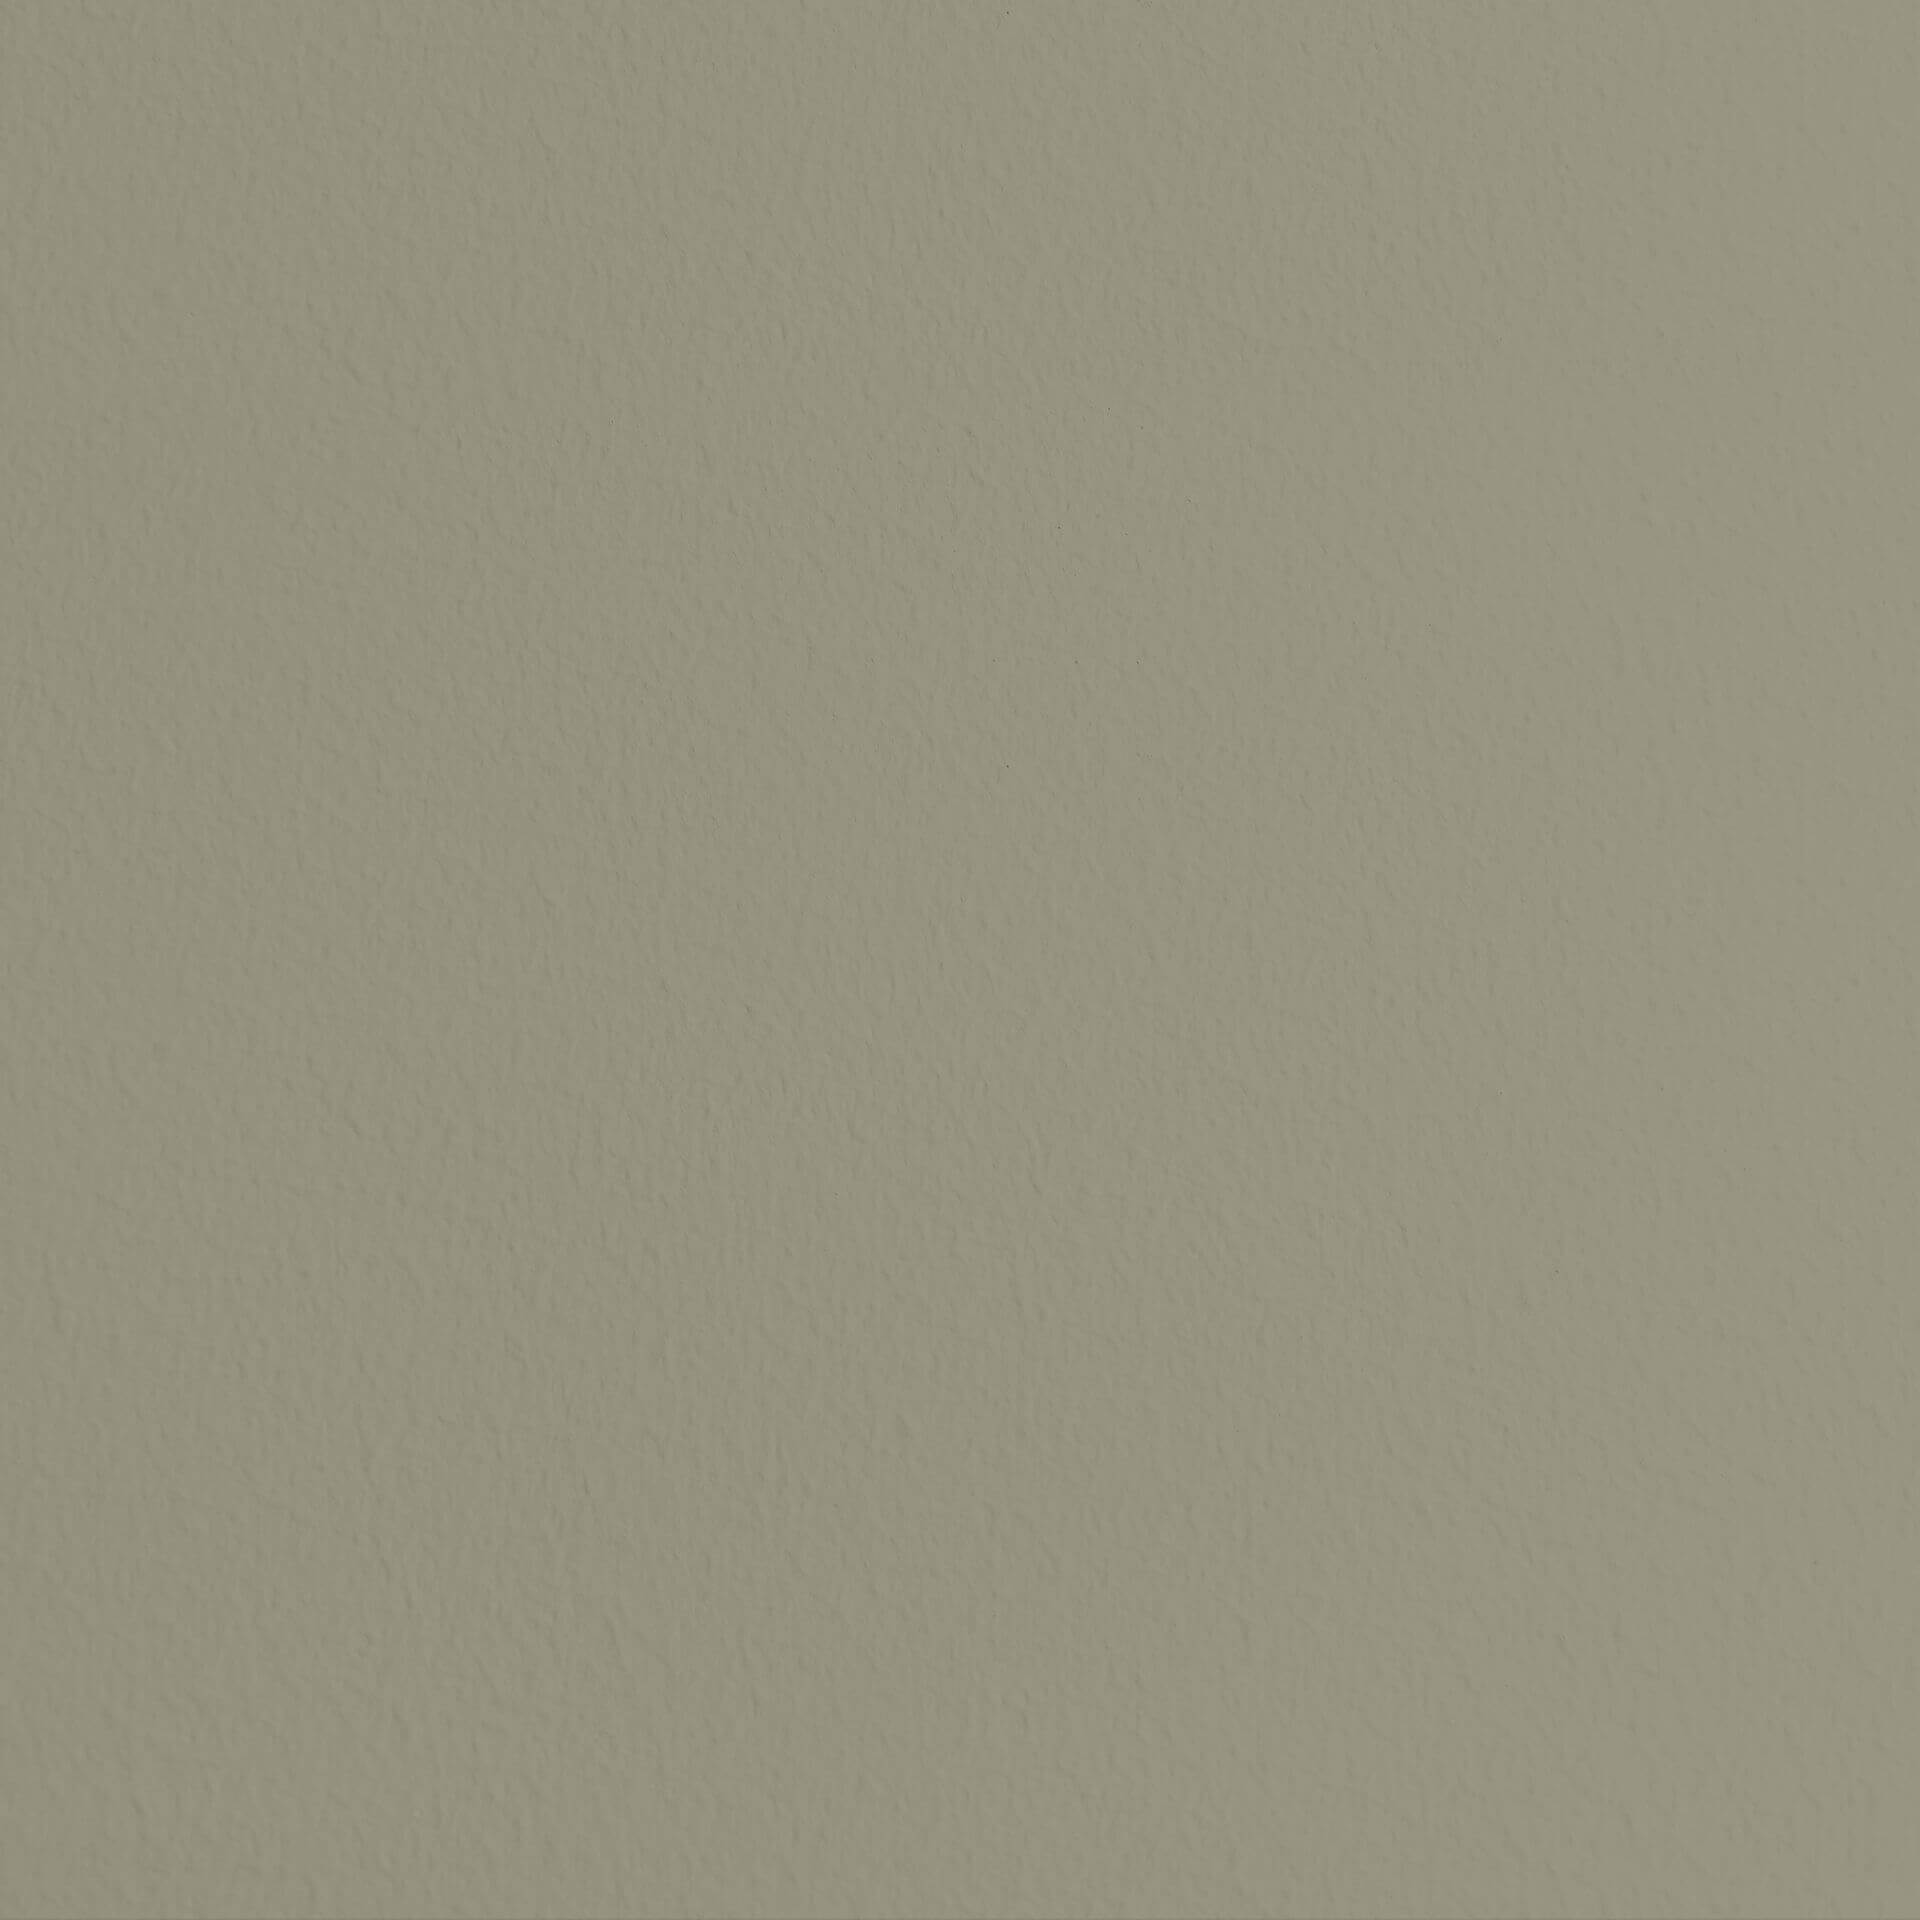 Mylands Empire Grey No. 171 - Marble Matt Emulsion / Wandfarbe, 2.5L